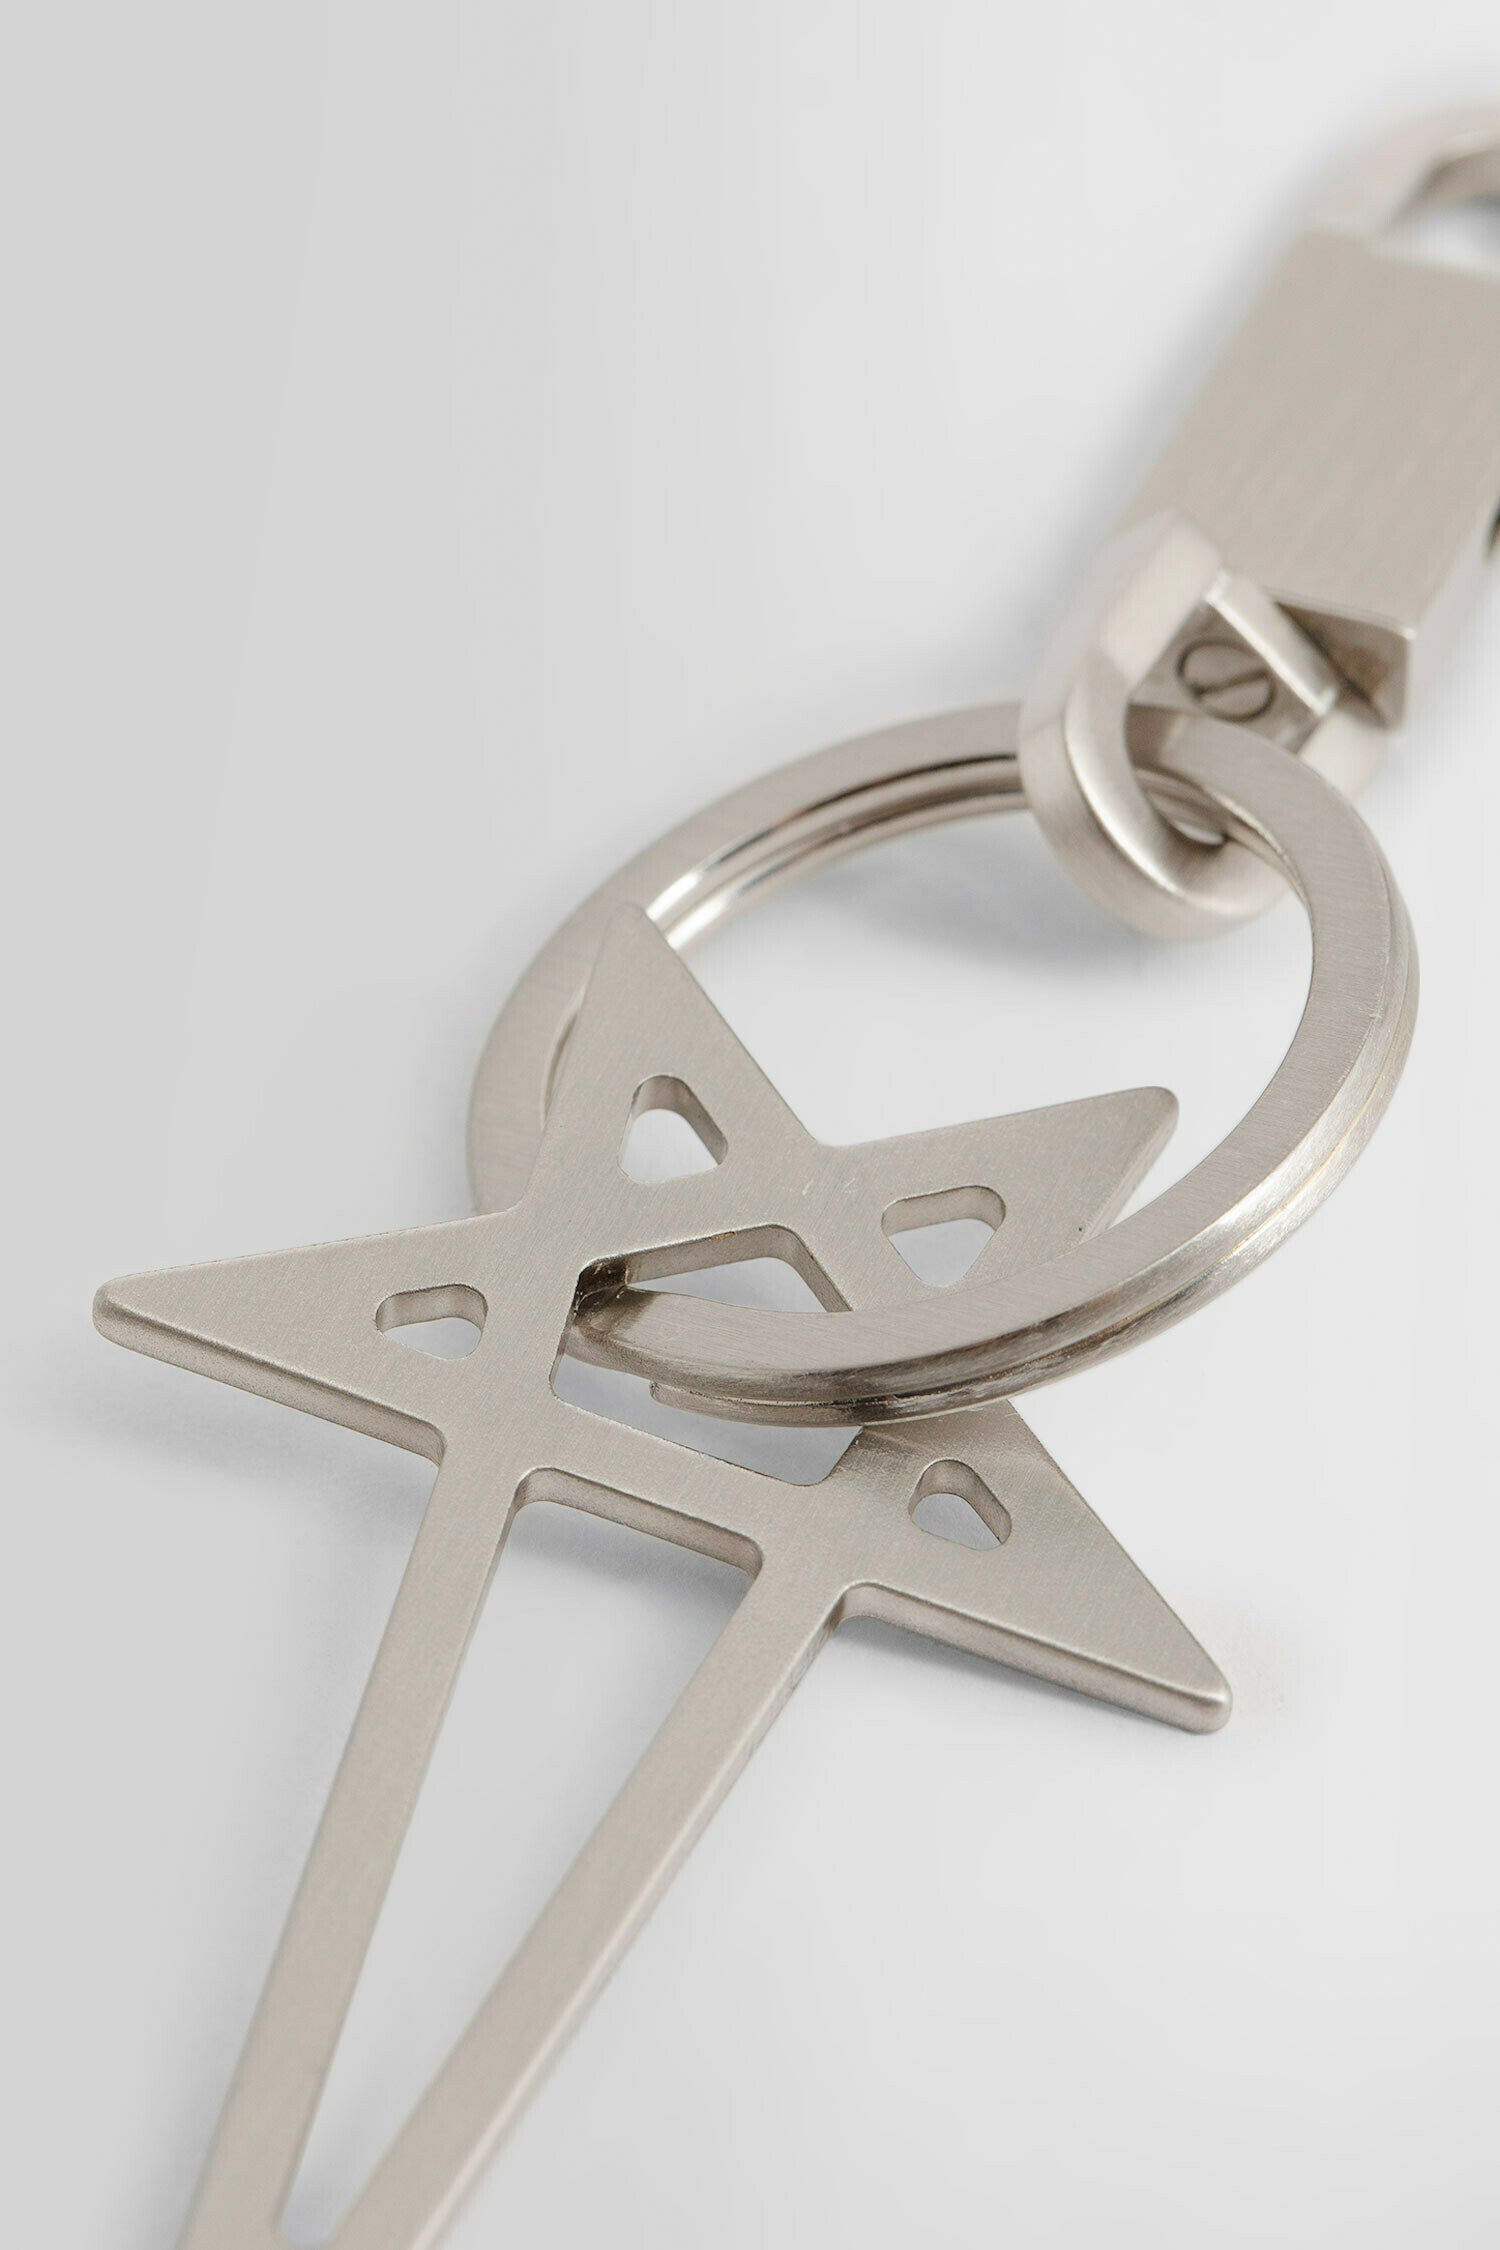 Rick Owens Woman Silver Keychains